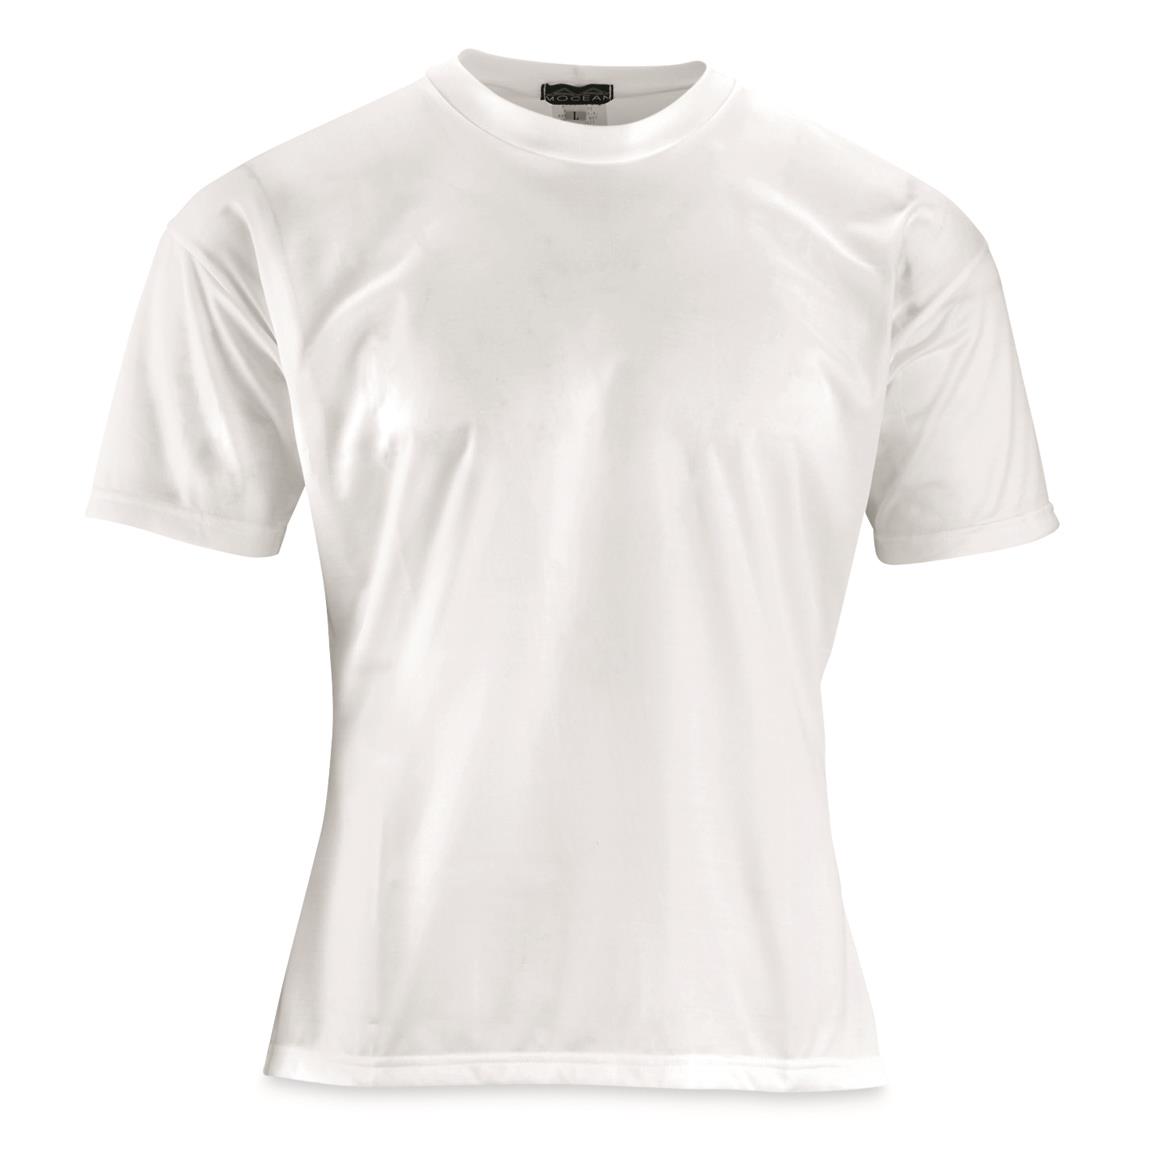 U.S. Police Surplus Mocean Crew Neck T-shirt, New, White